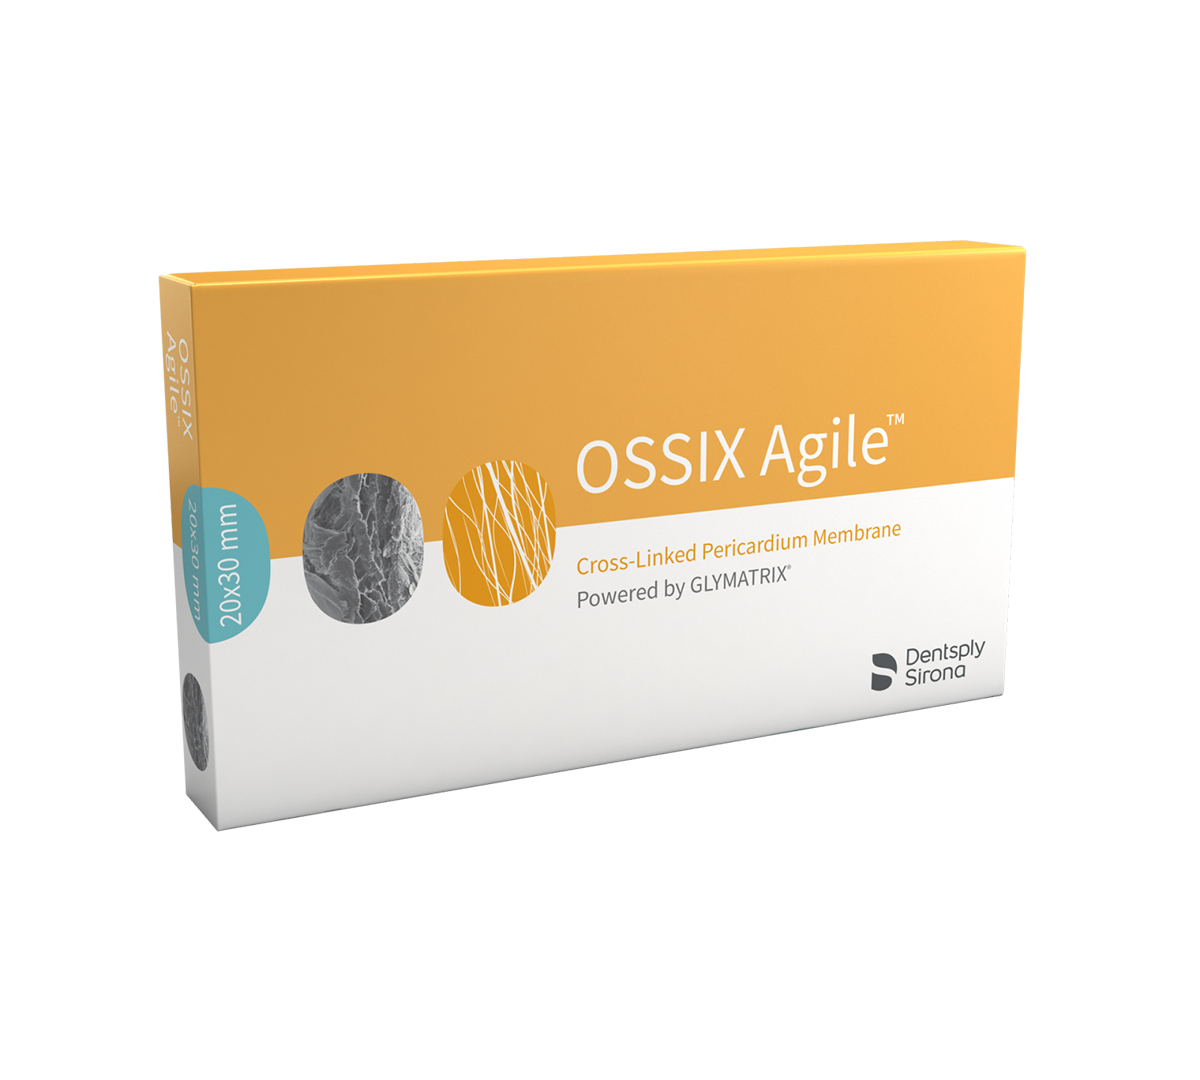 OSSIX Agile | Image Credit: © Dentsply Sirona